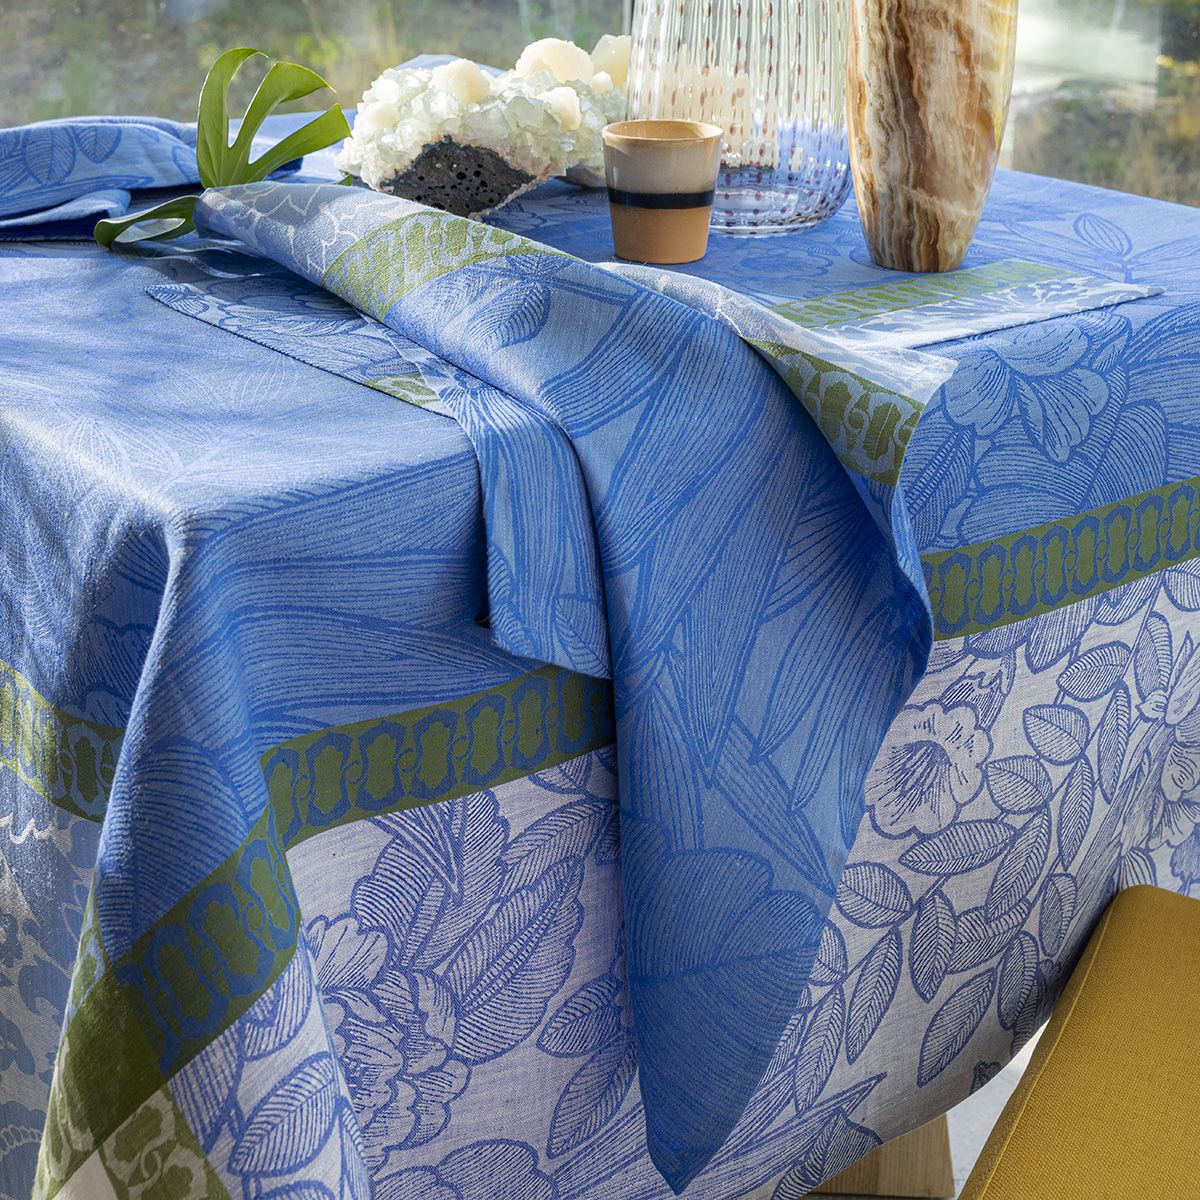 Escapade Tropicale - Linen Tablecloth, Placemats, Napkins & Runner